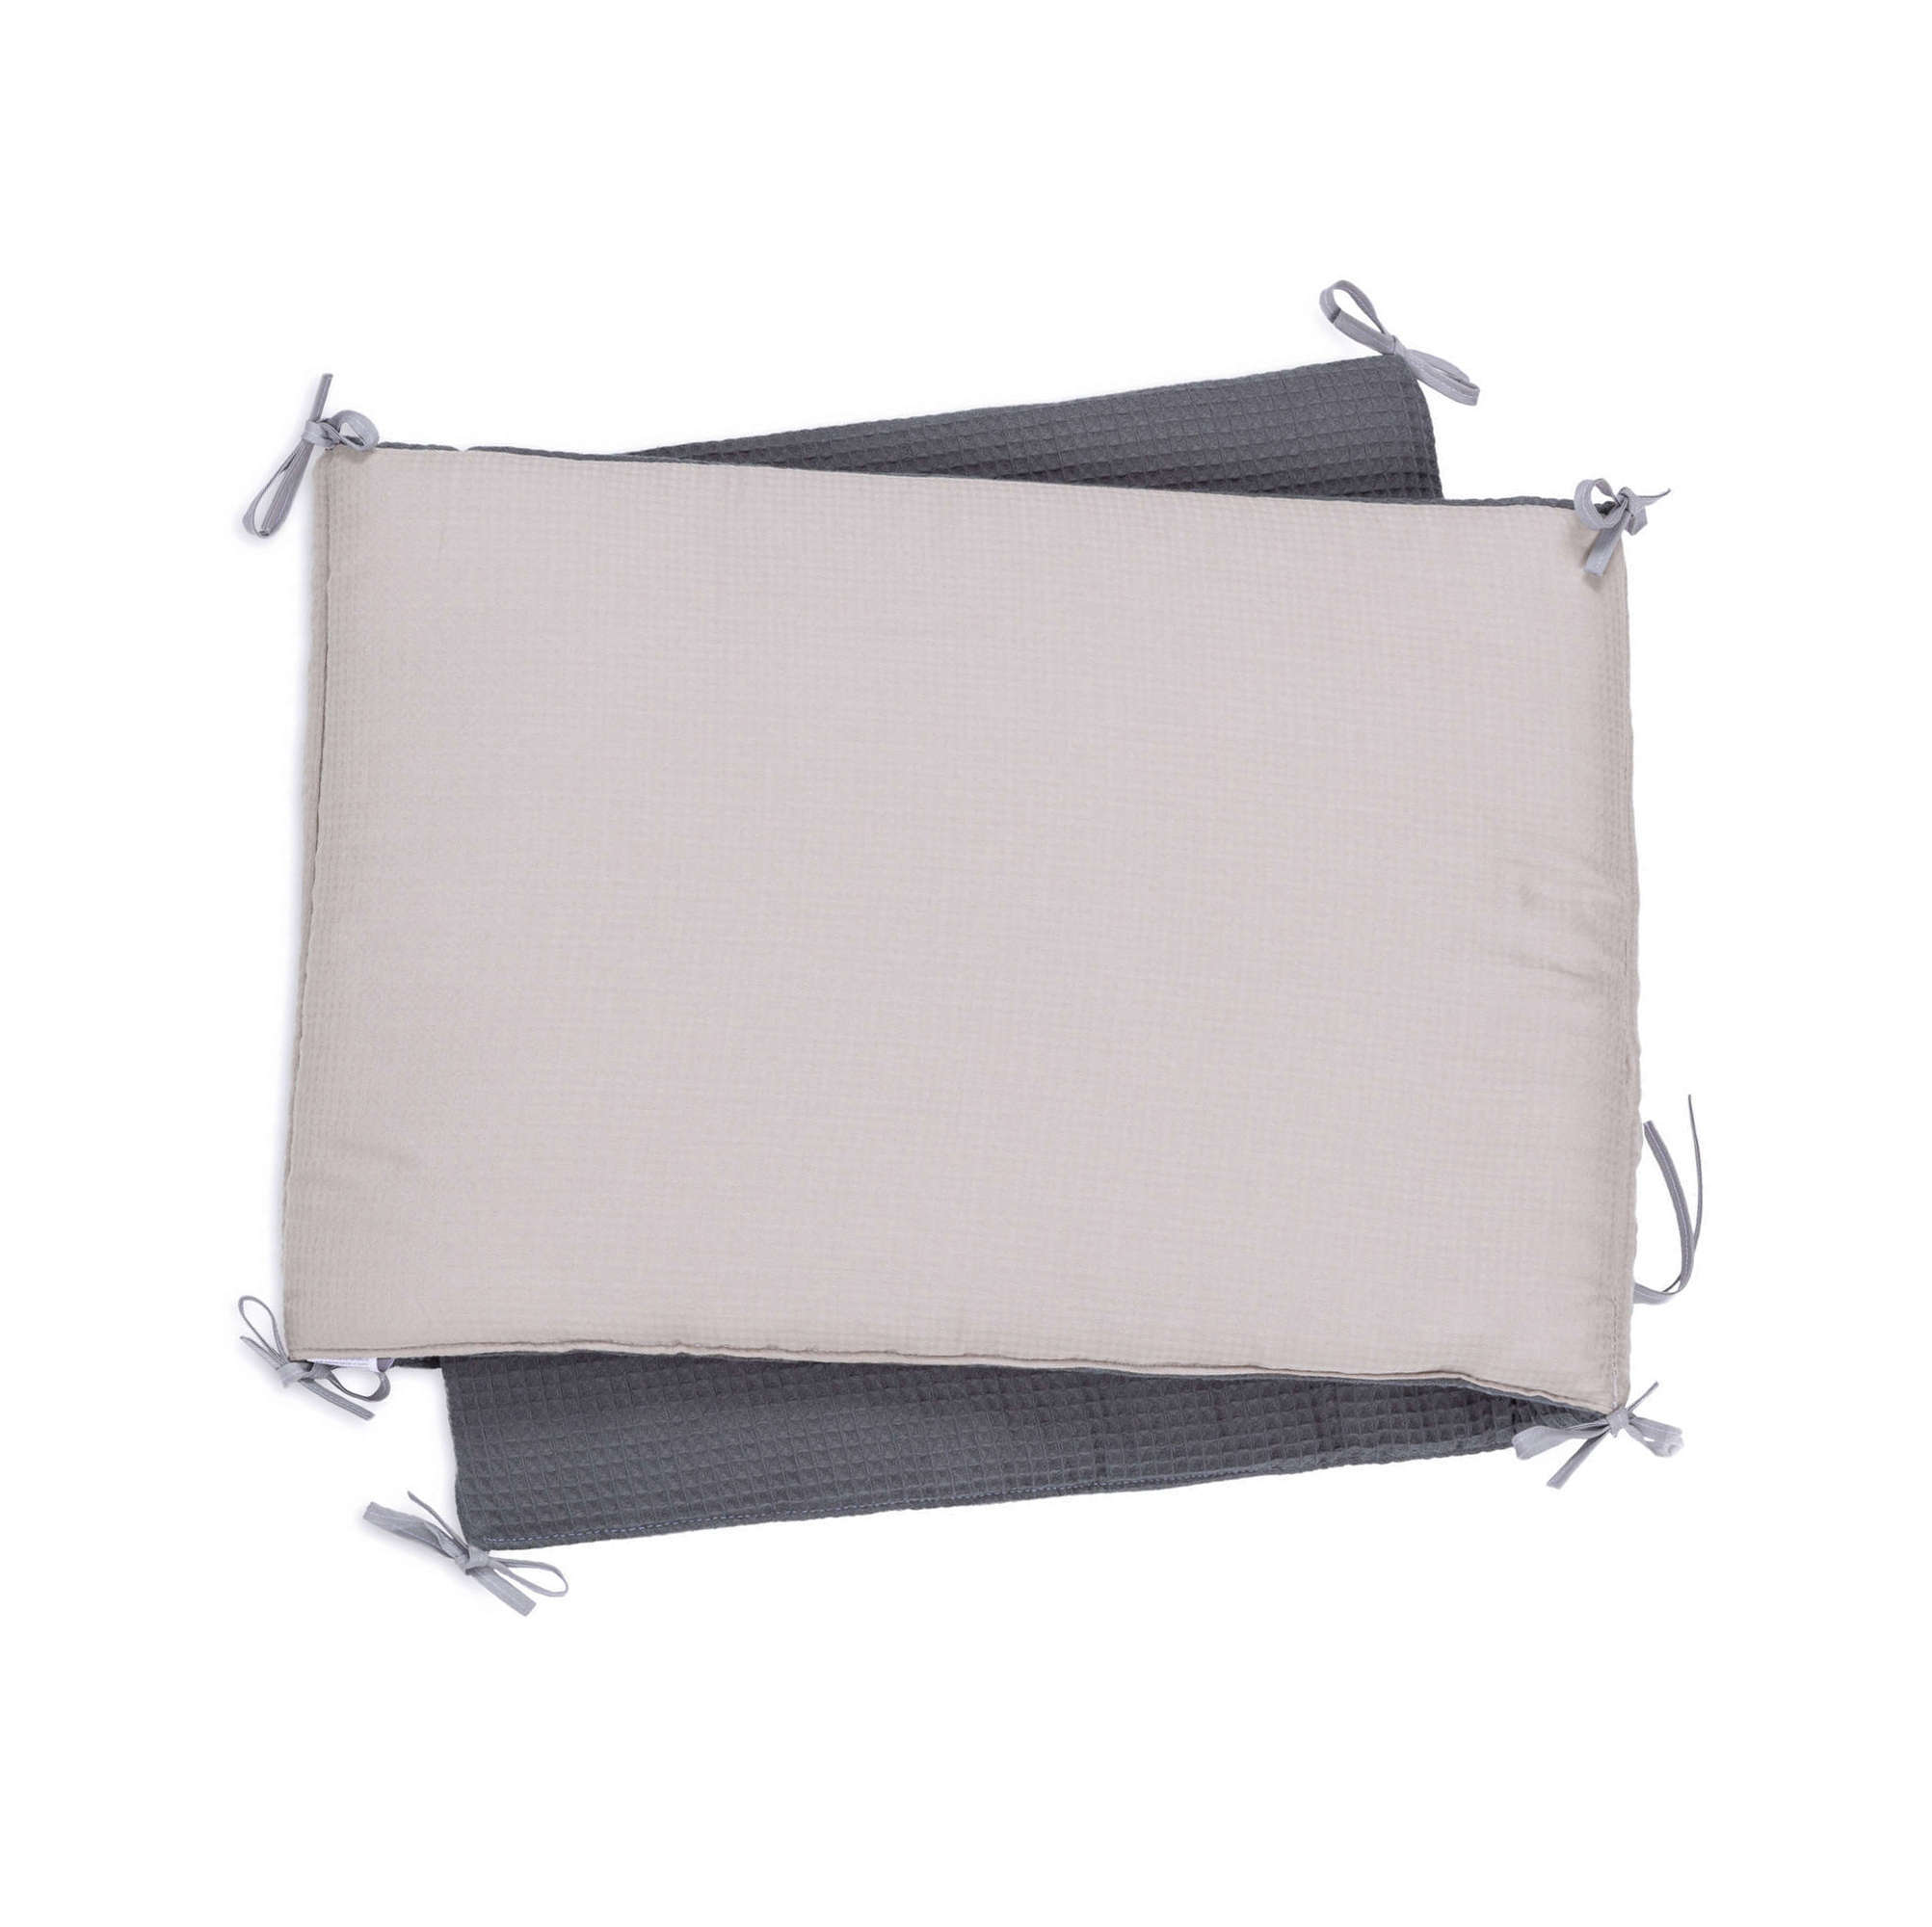 Protector cuna cama transformable 60x120 cm reversible con cintas de unión